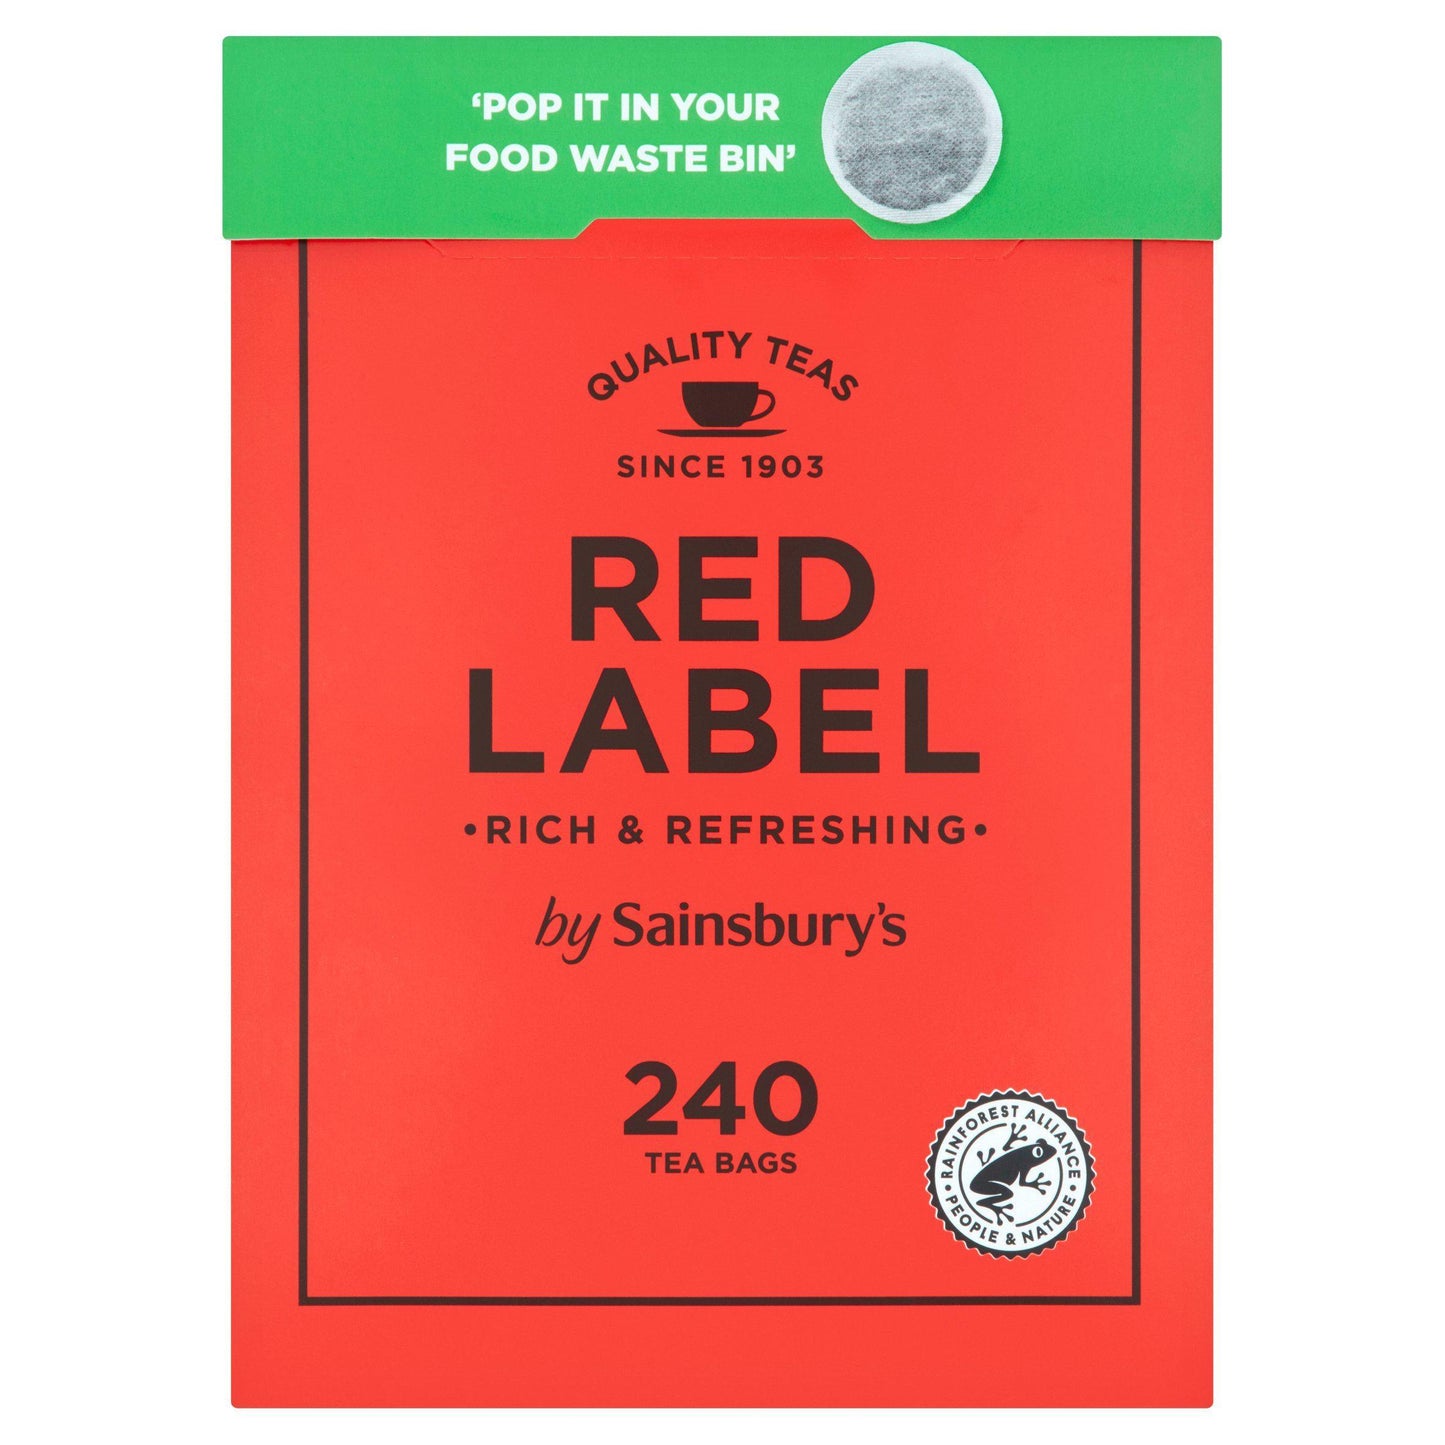 Sainsbury's Red Label Tea Bags